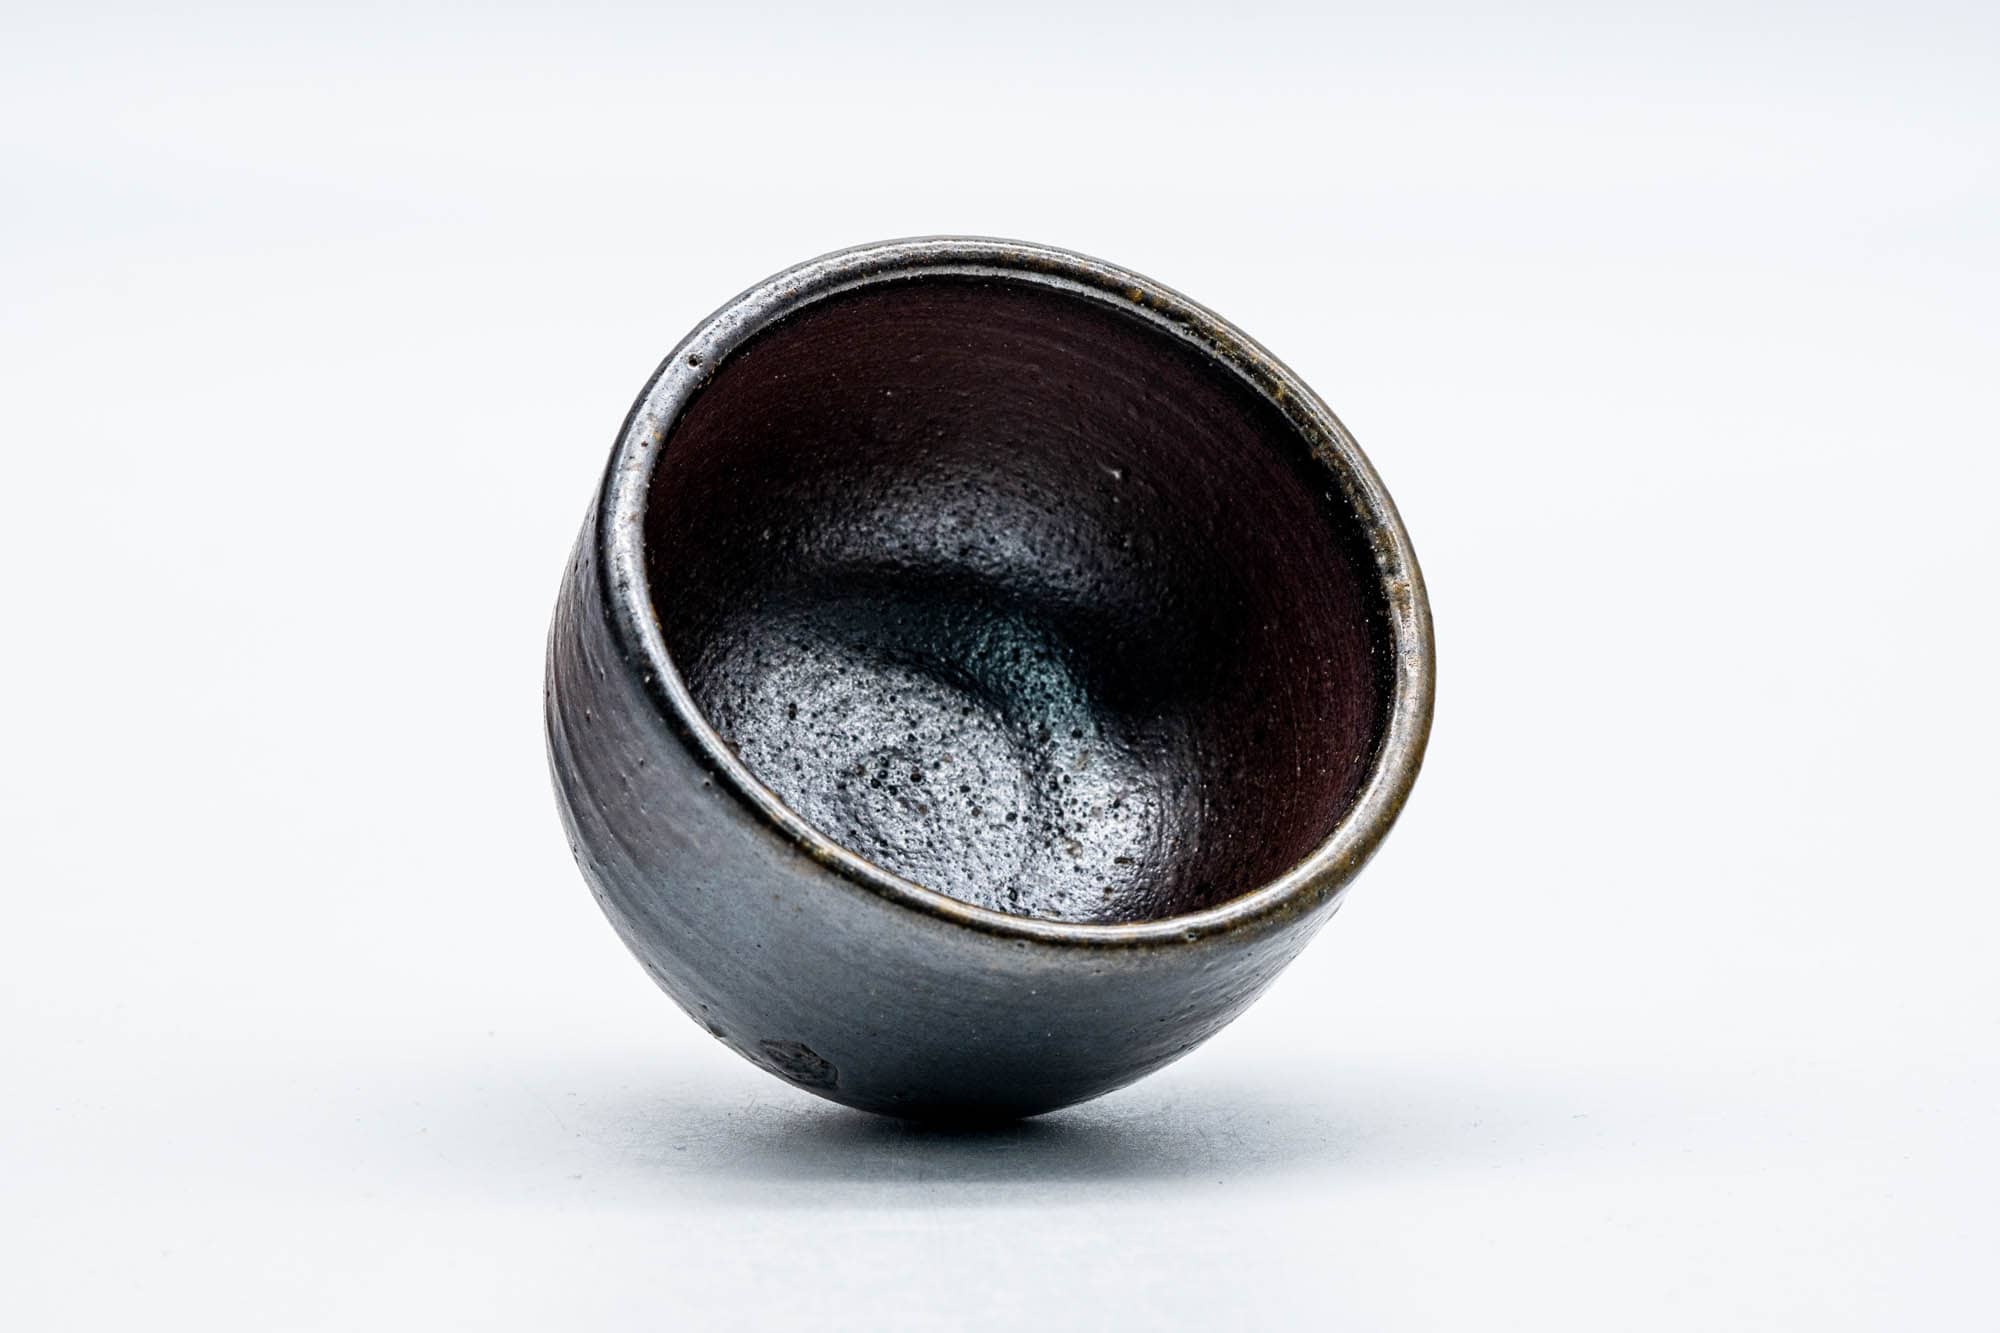 Japanese Teacup - Black Brown Glazed Yunomi - 70ml